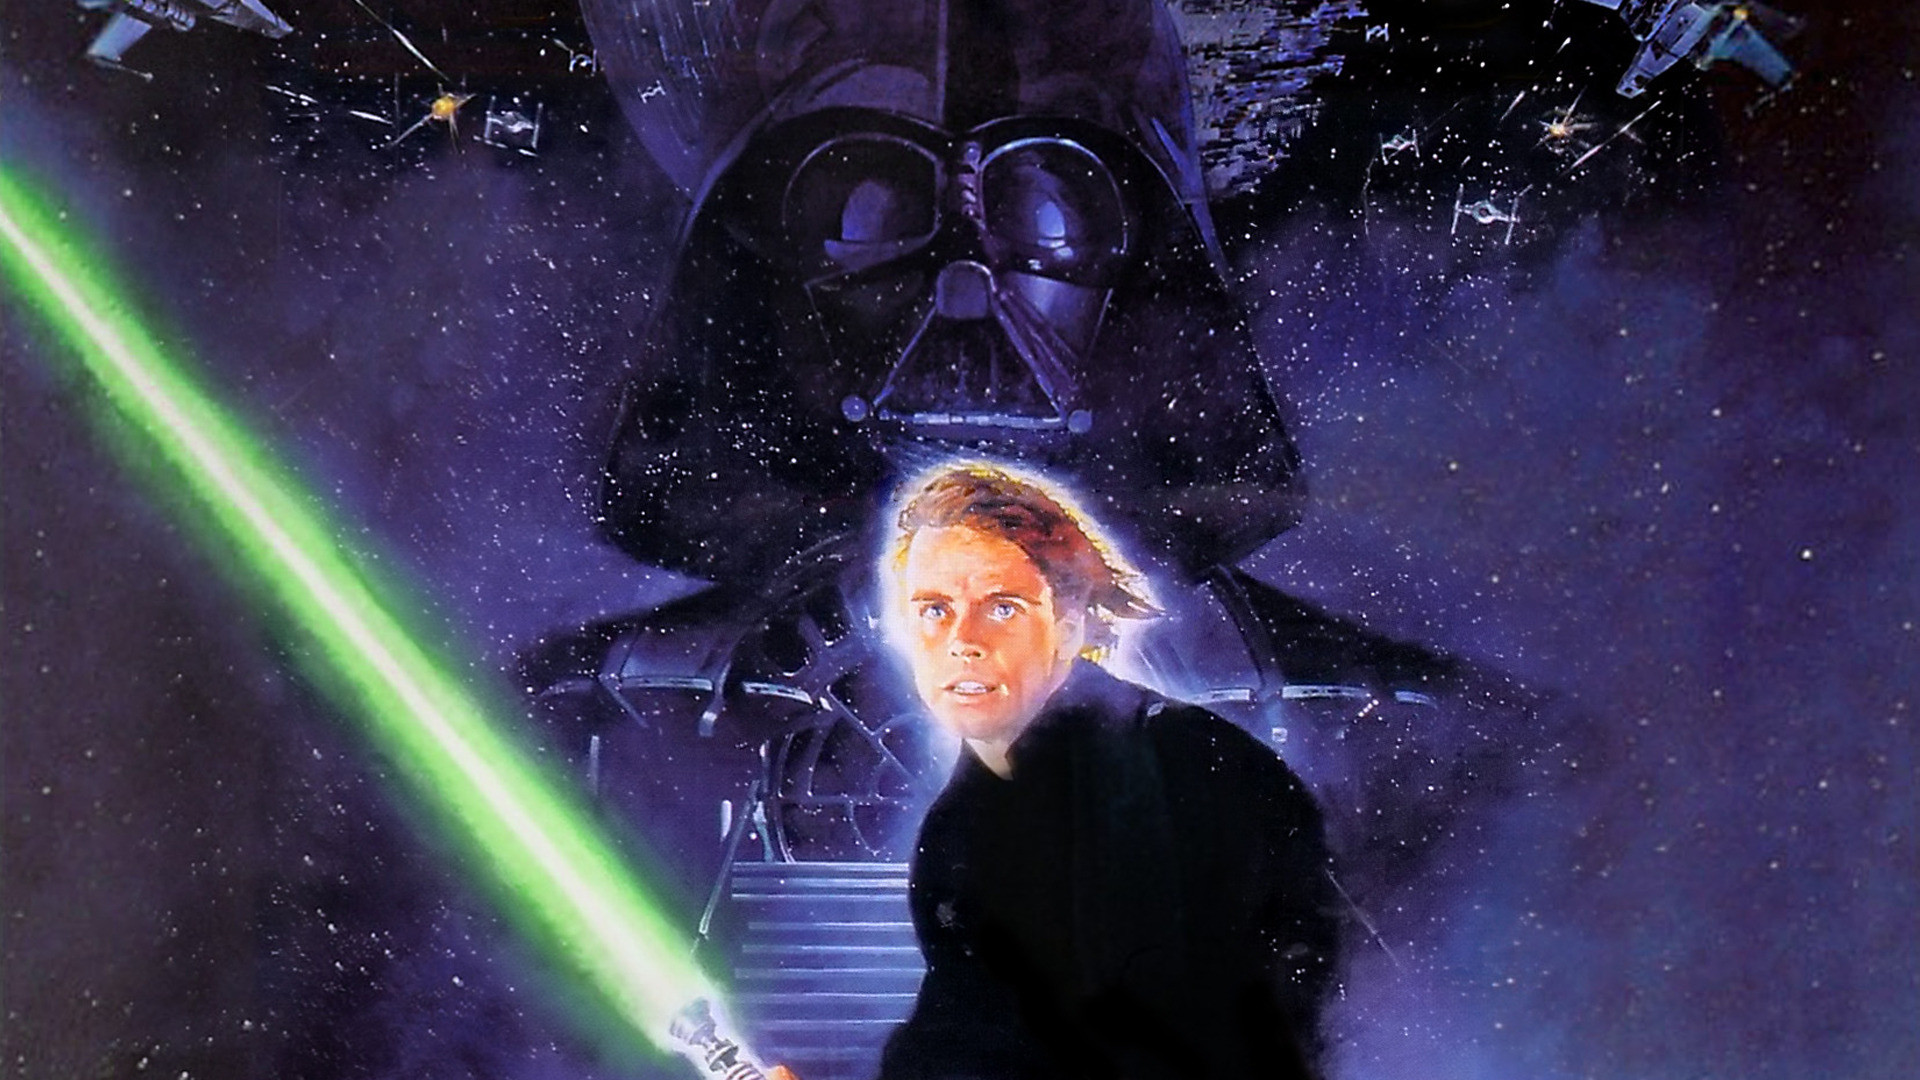 Star Wars Episode VI: Return Of The Jedi HD Wallpaper and Background